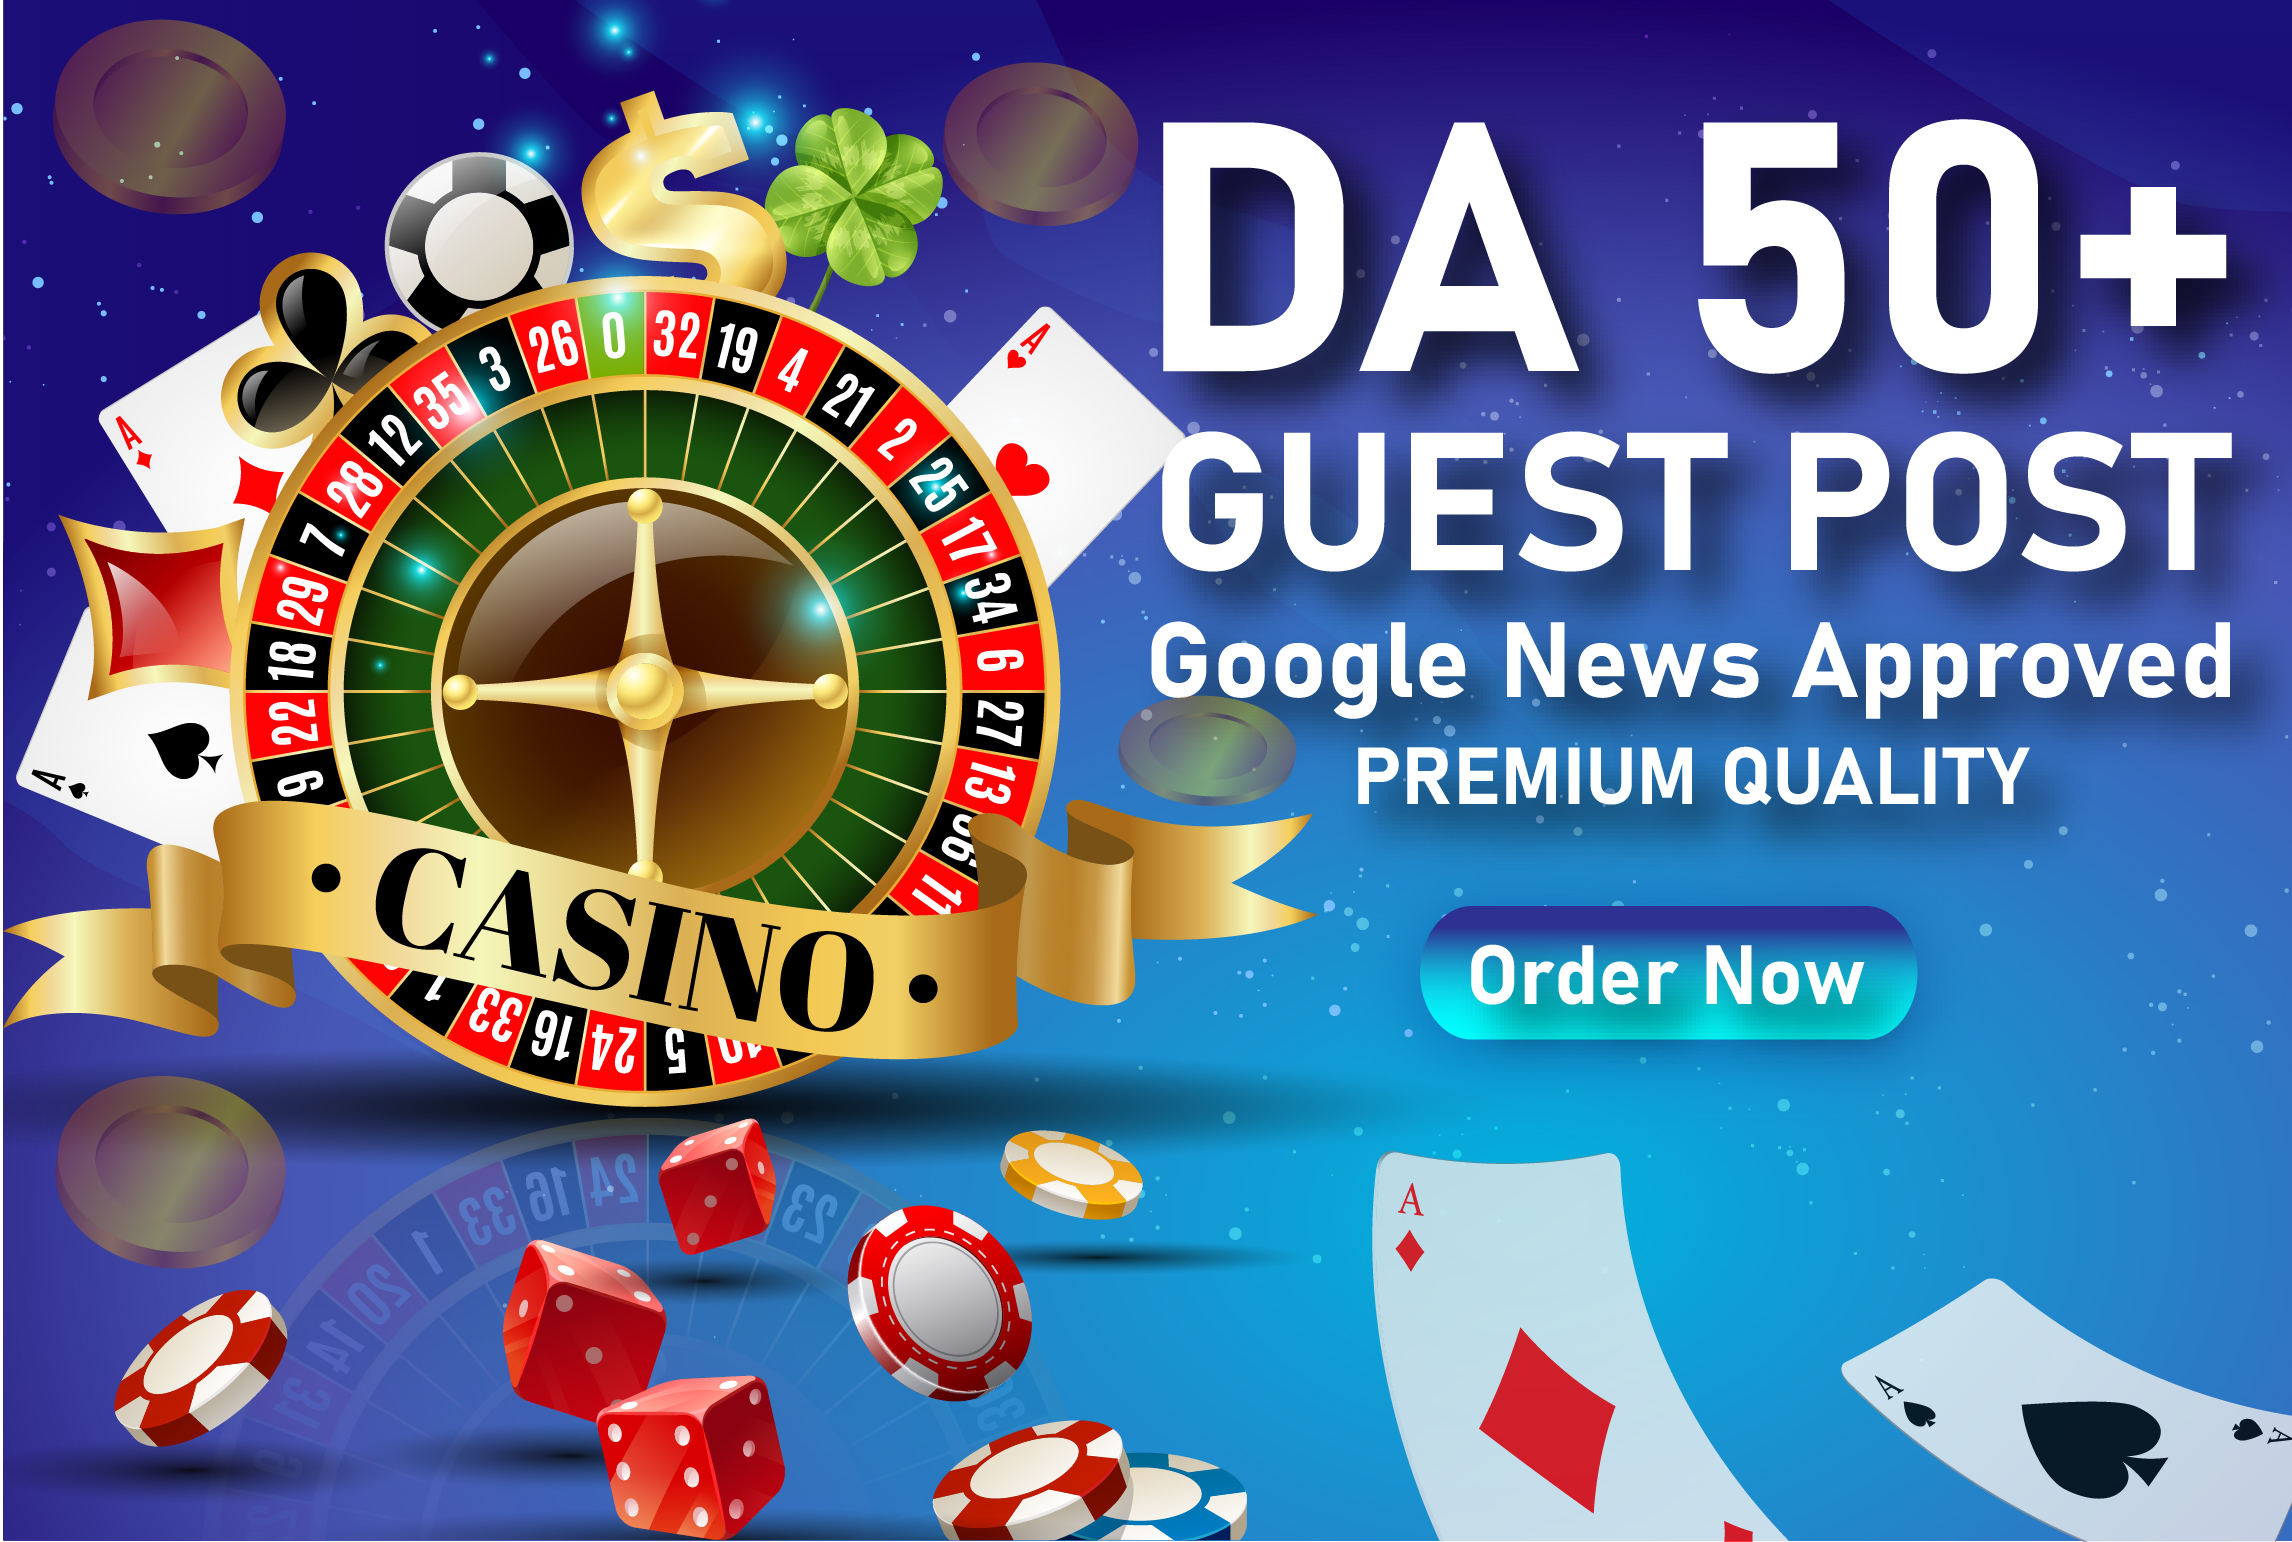 Casino Poker Gambling Slot Betting Niche 4 guest post on DA 50 Plus premium sites